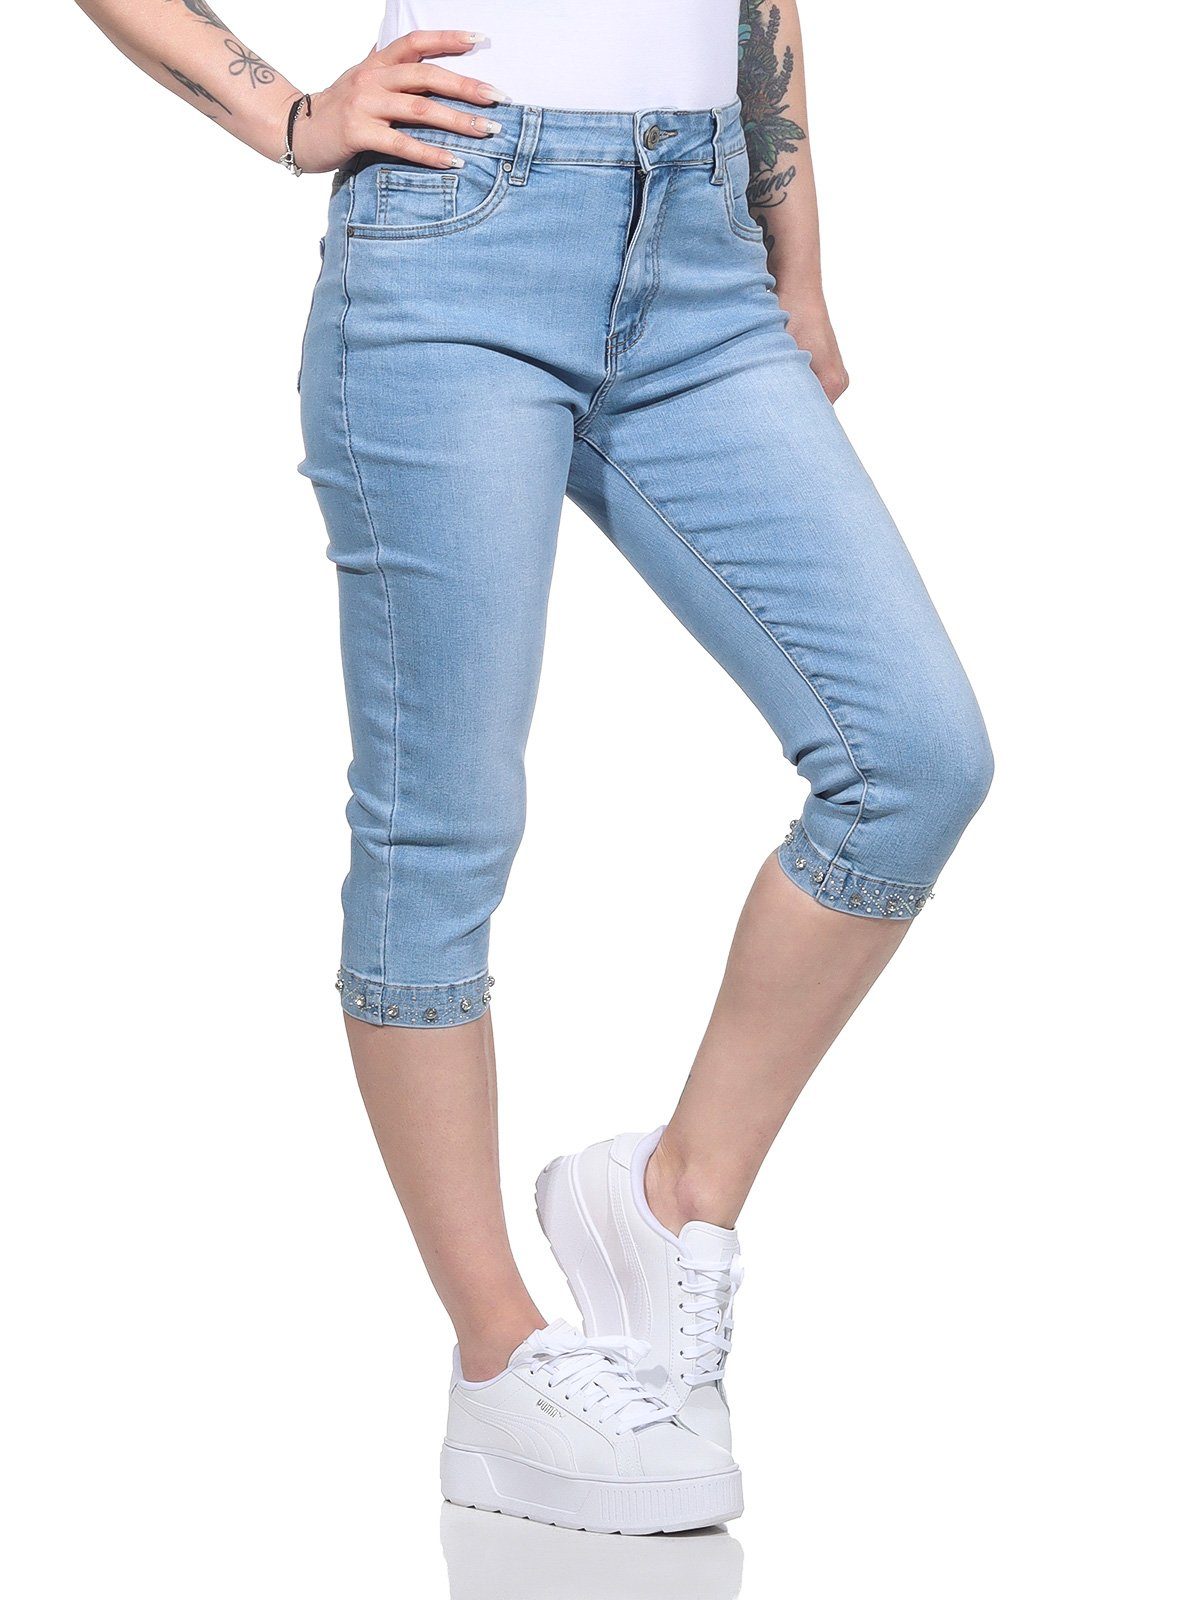 Aurela Damenmode Jeansbermudas Jeans kurze Sommer mit Caprihosen Damen Stretchanteil, Jeanshosen Bermuda 5-Pocket-Style